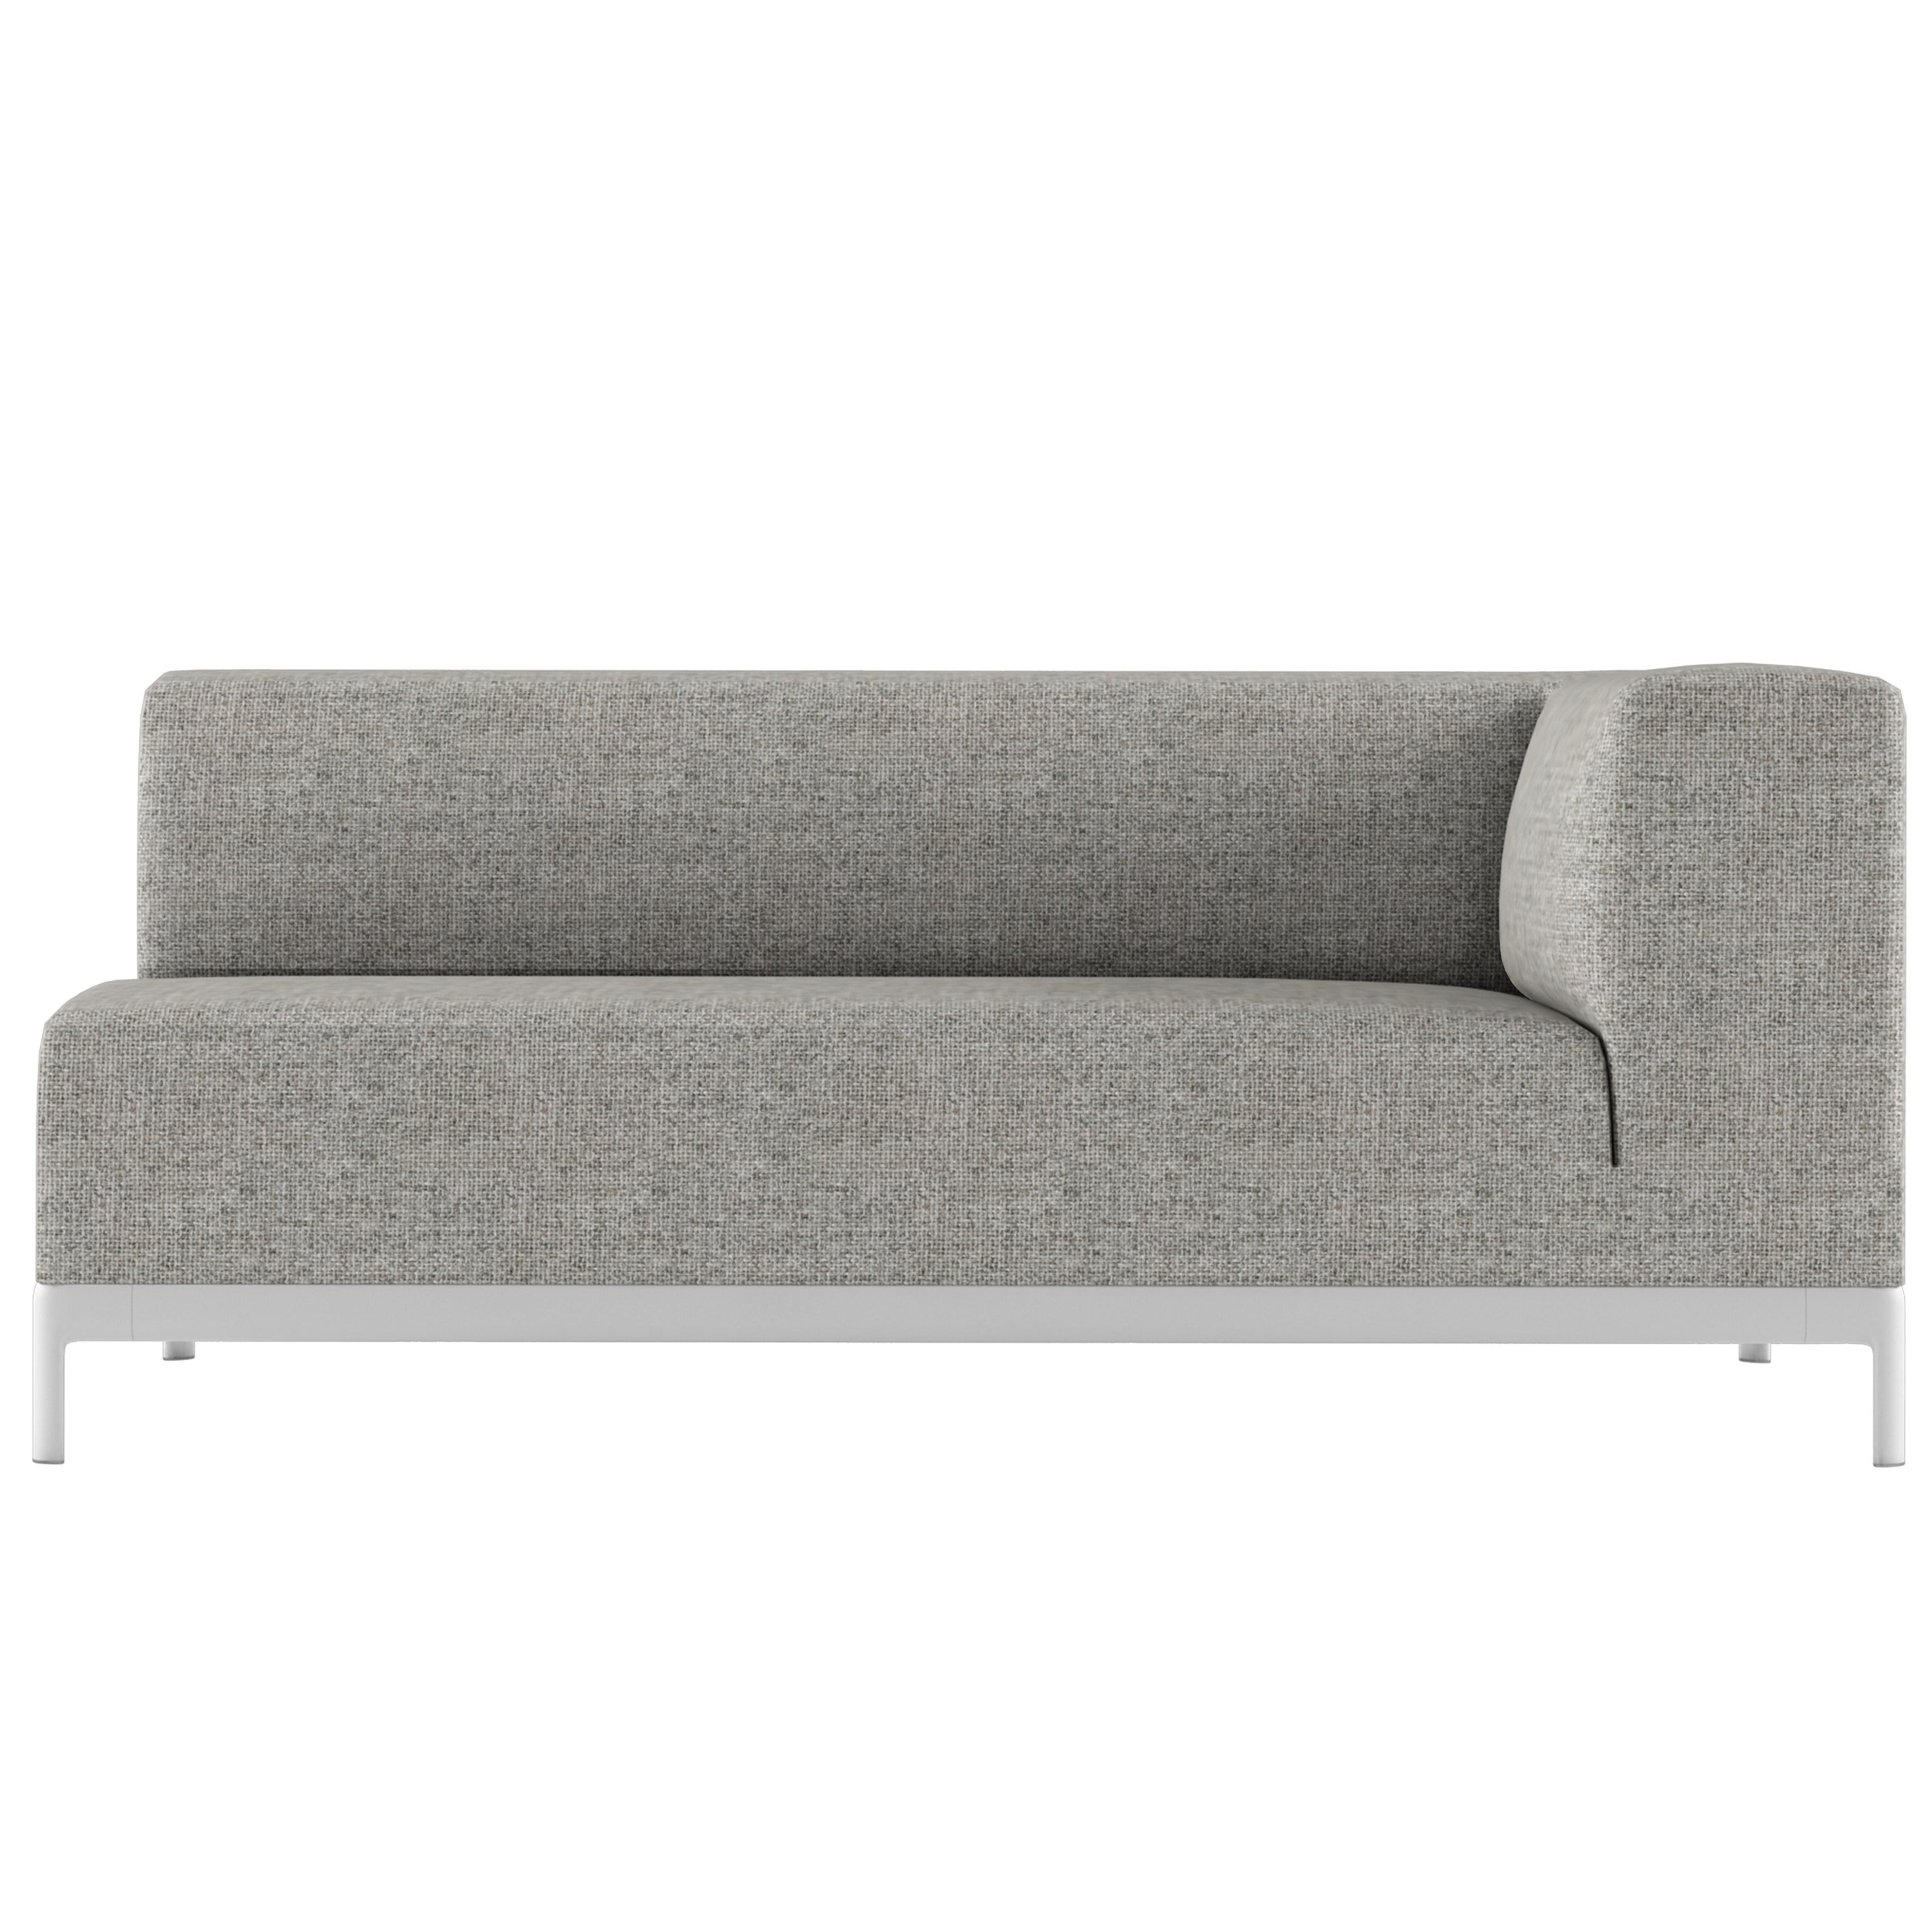 Alias P63 AluZen Outdoor SX Soft Angular Sofa in Upholstery with Aluminium Frame For Sale